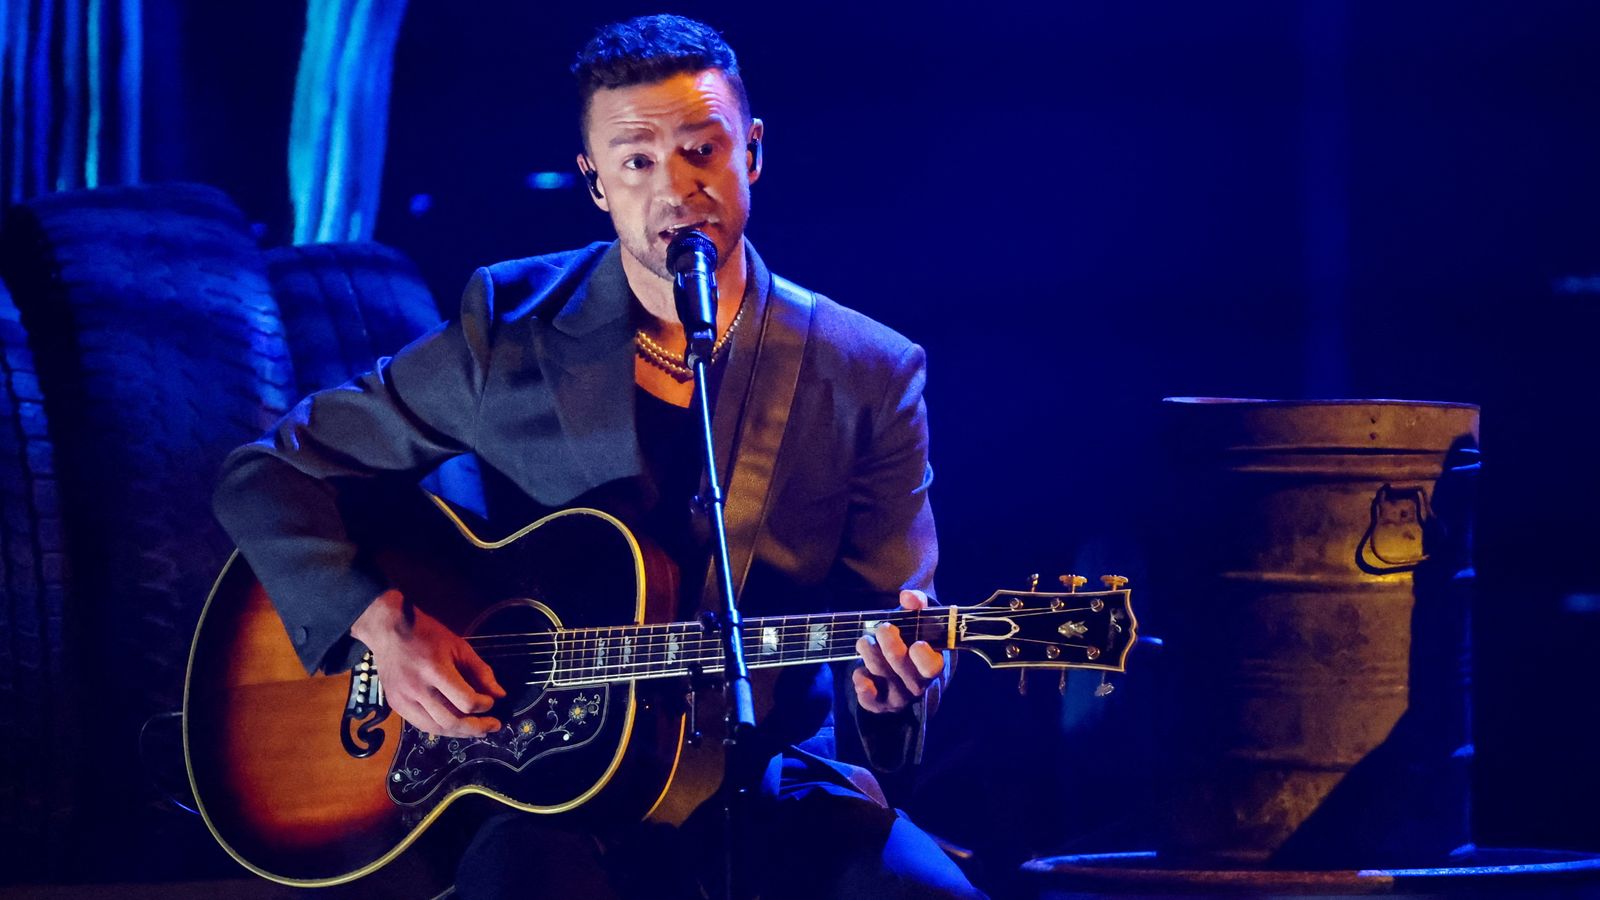 Justin Timberlake addresses 'tough week' at first concert since drink-driving arrest